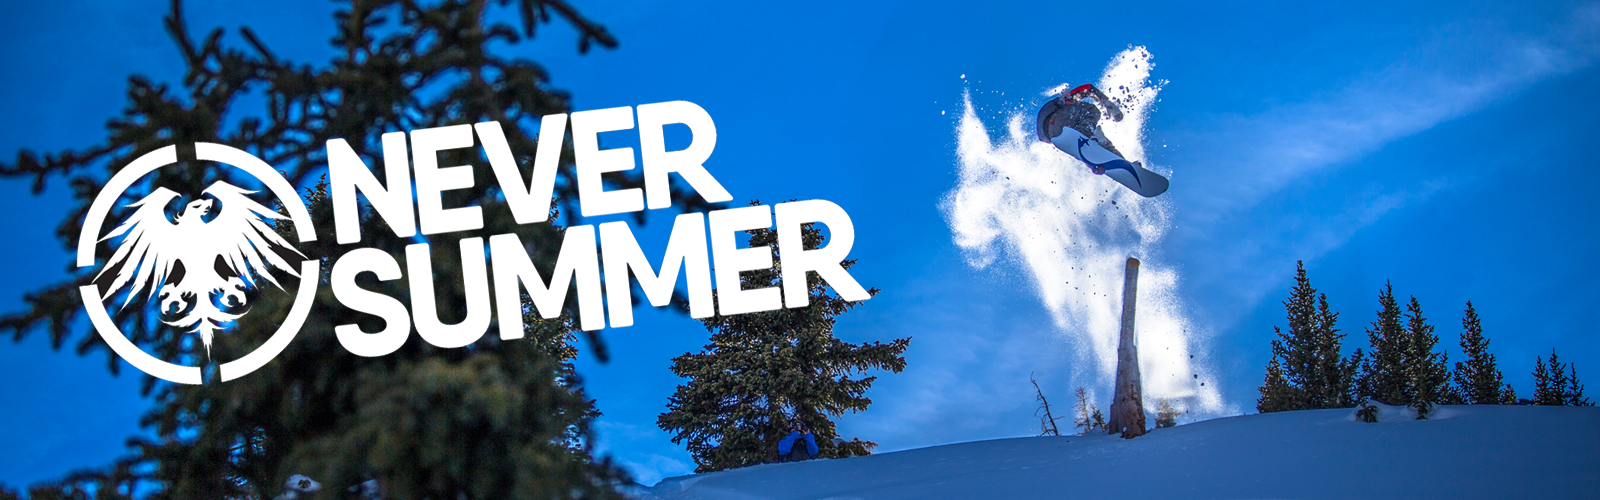 Never Summer snowboards